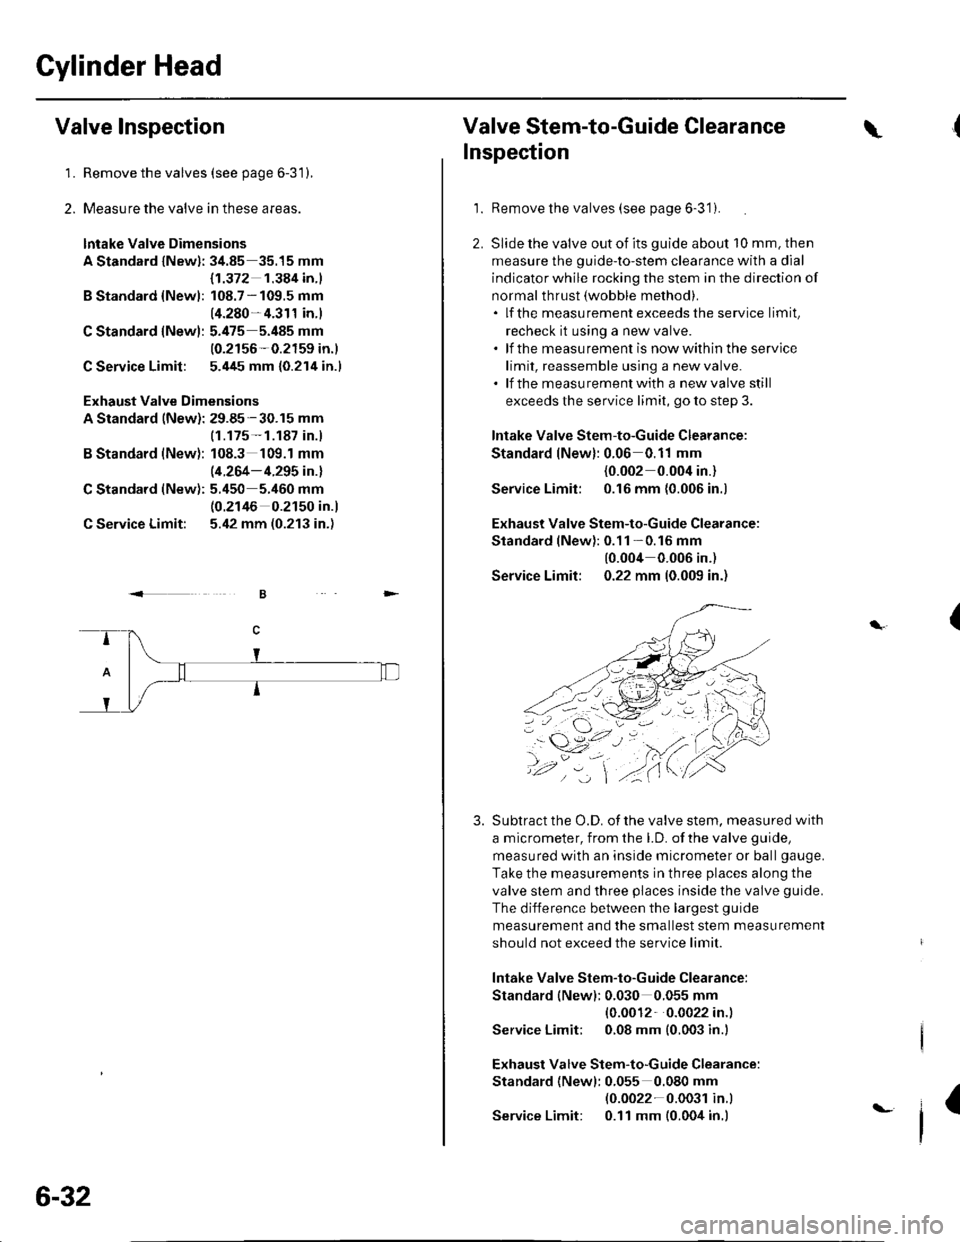 HONDA CIVIC 2003 7.G Workshop Manual Gylinder Head
Valve Inspection
1.Remove the valves (see page 6-31),
Measure the valve in these areas.
lntake Valve Dimensions
A Standard lNewl: 34.85 35.15 mm
B Standard {Newl:
C Standard lNew):
C Ser